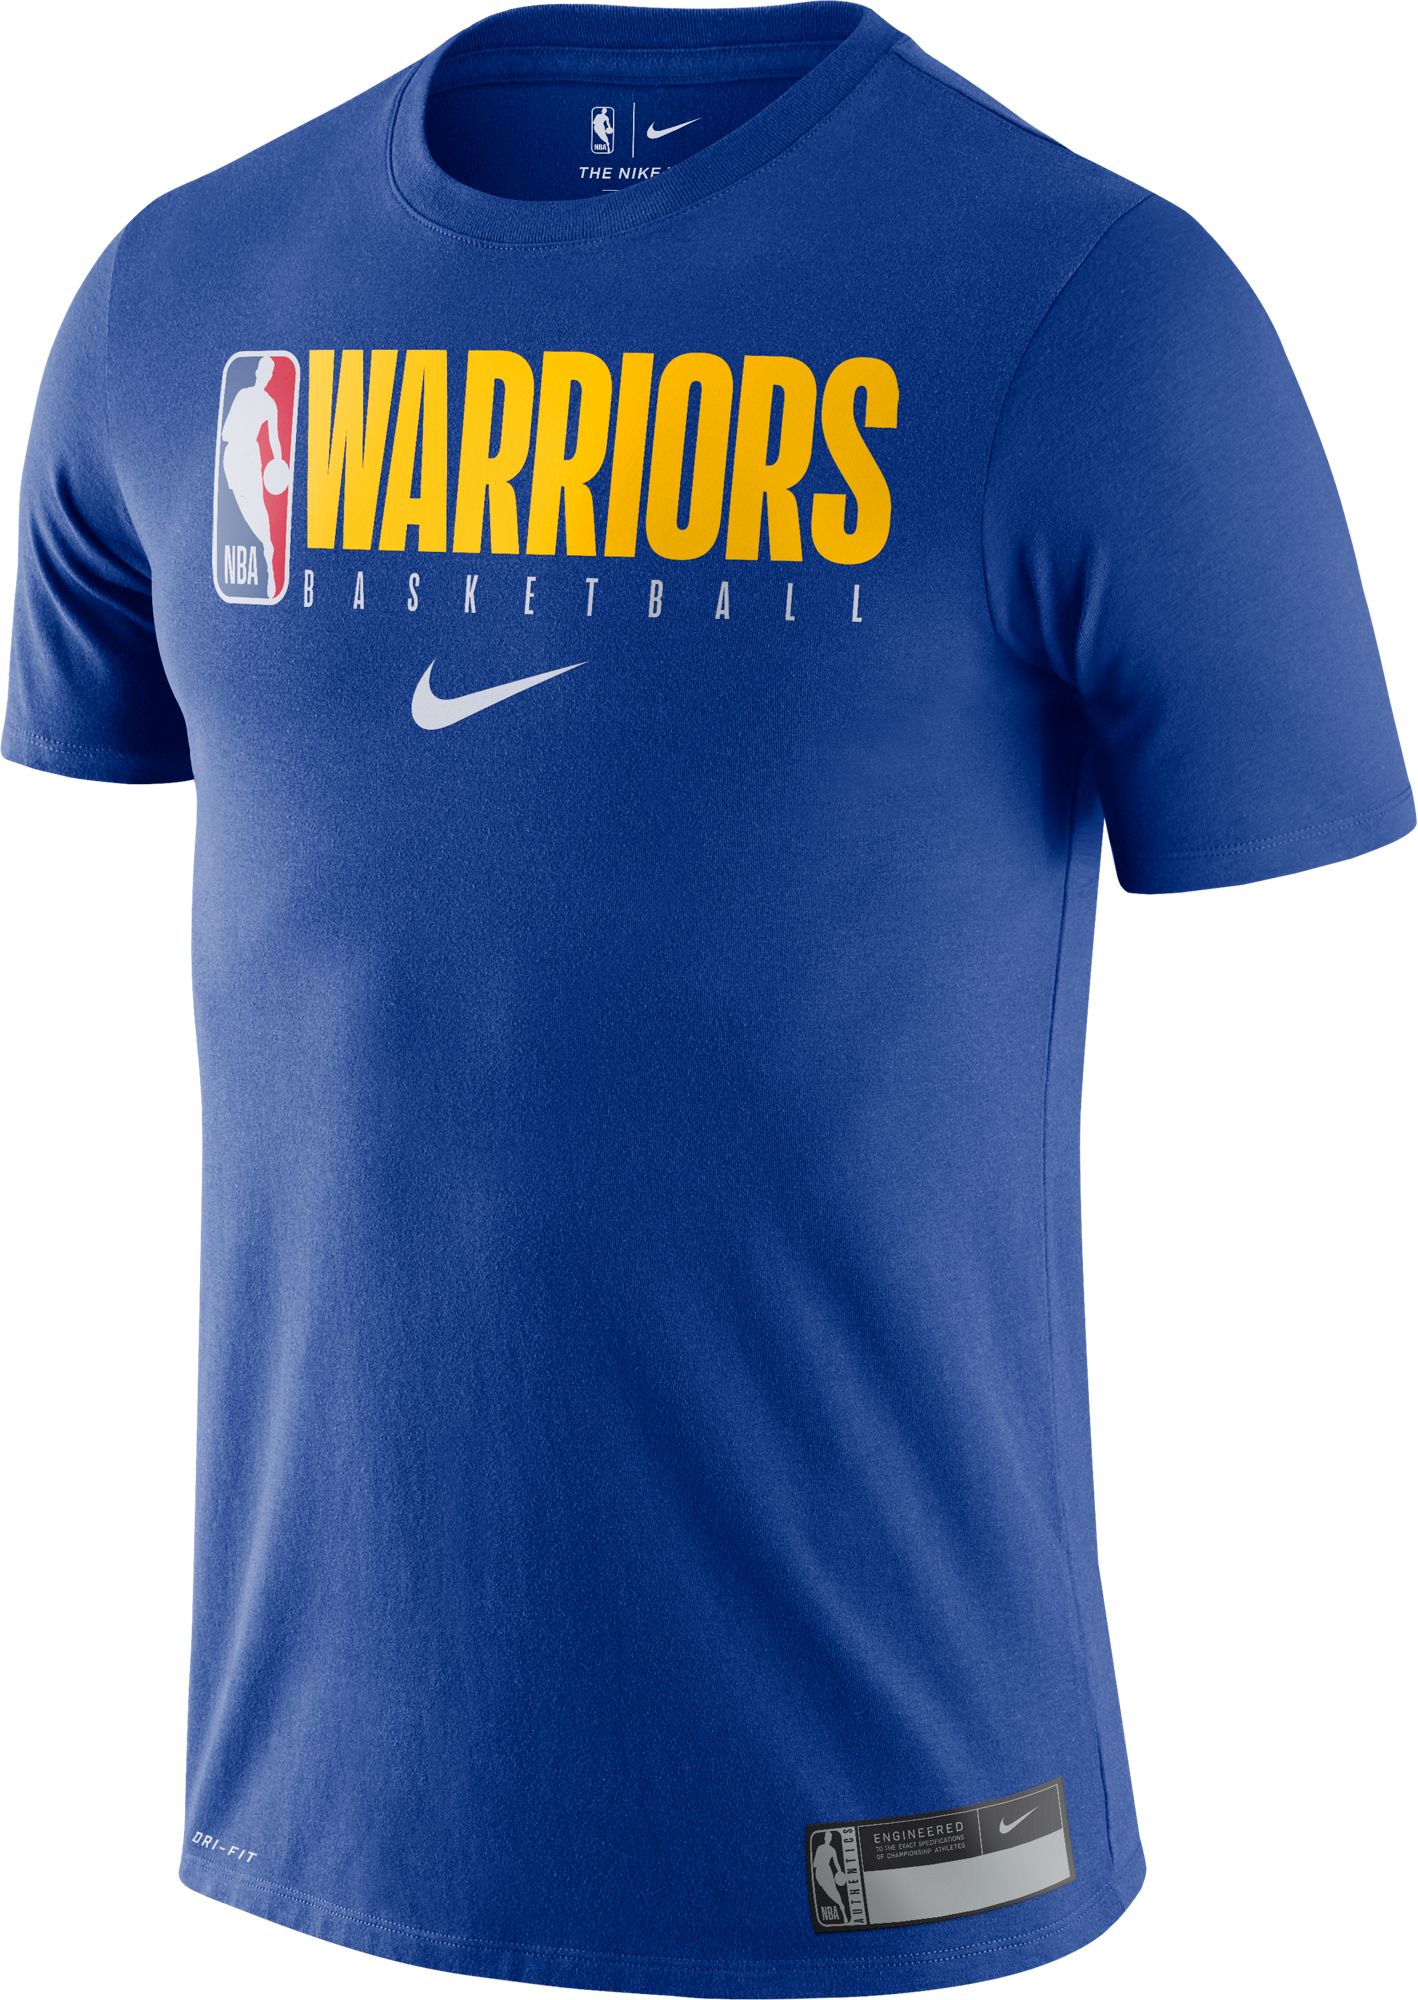 warriors playoff shirts